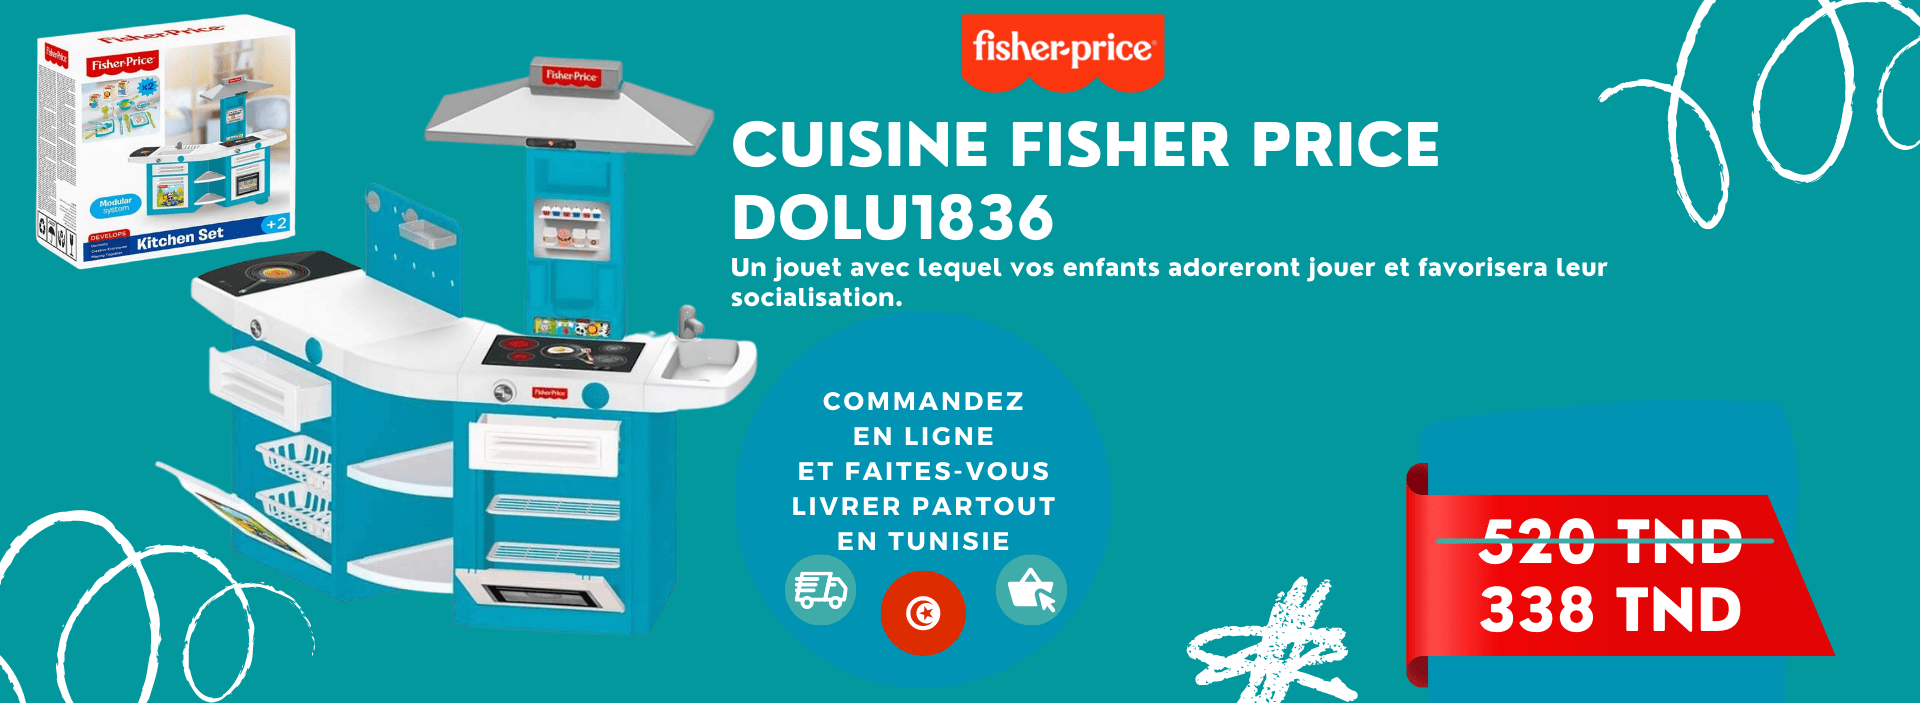 SLIDER_Cuisine Fisher price DOLU1836